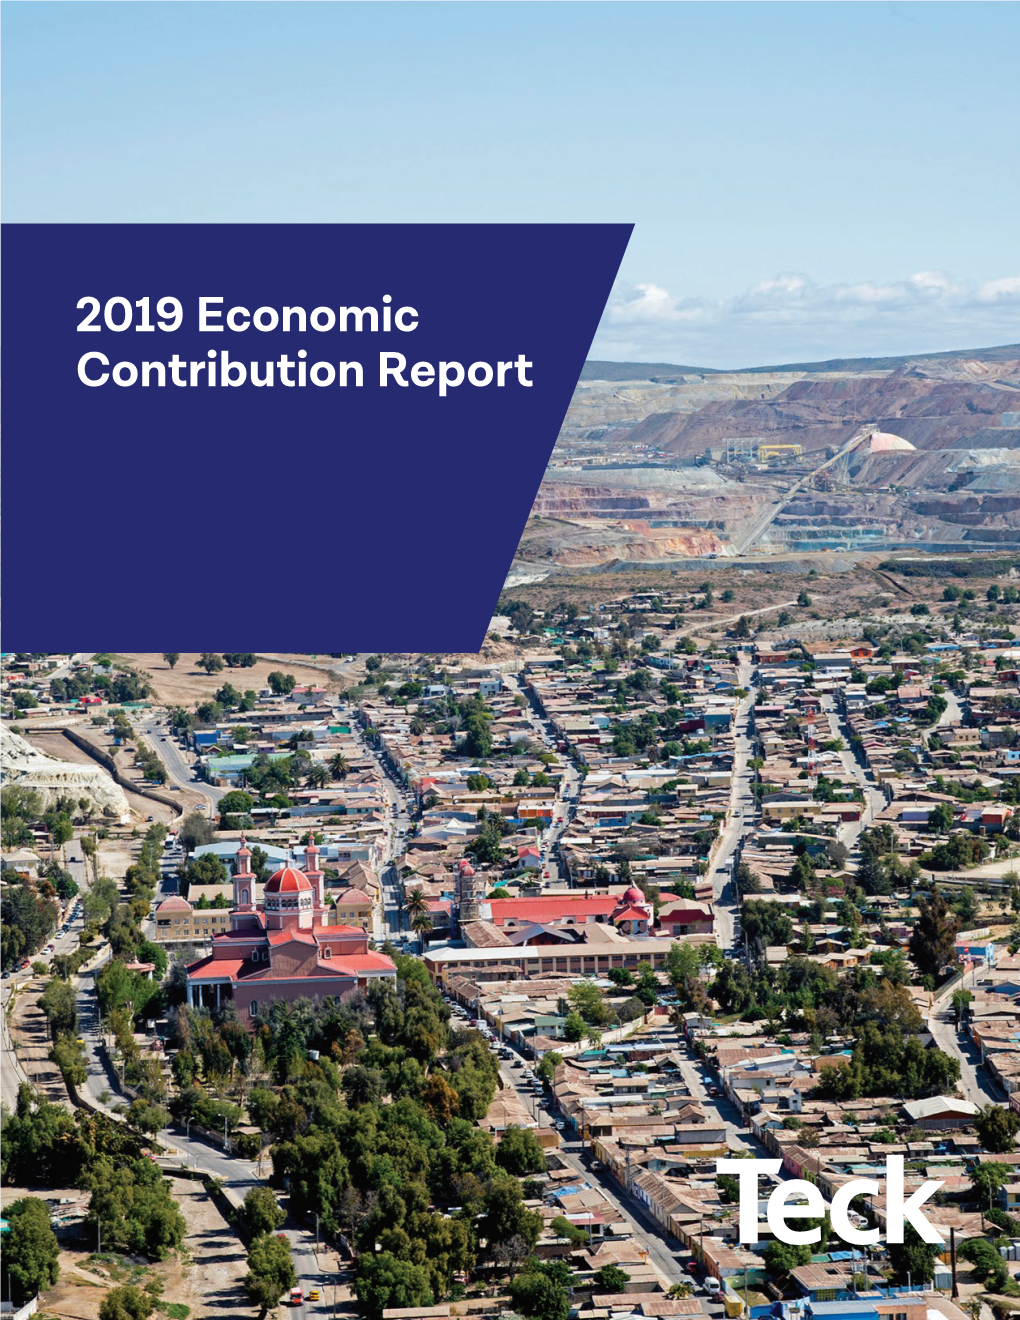 2019 Economic Contribution Report Contents